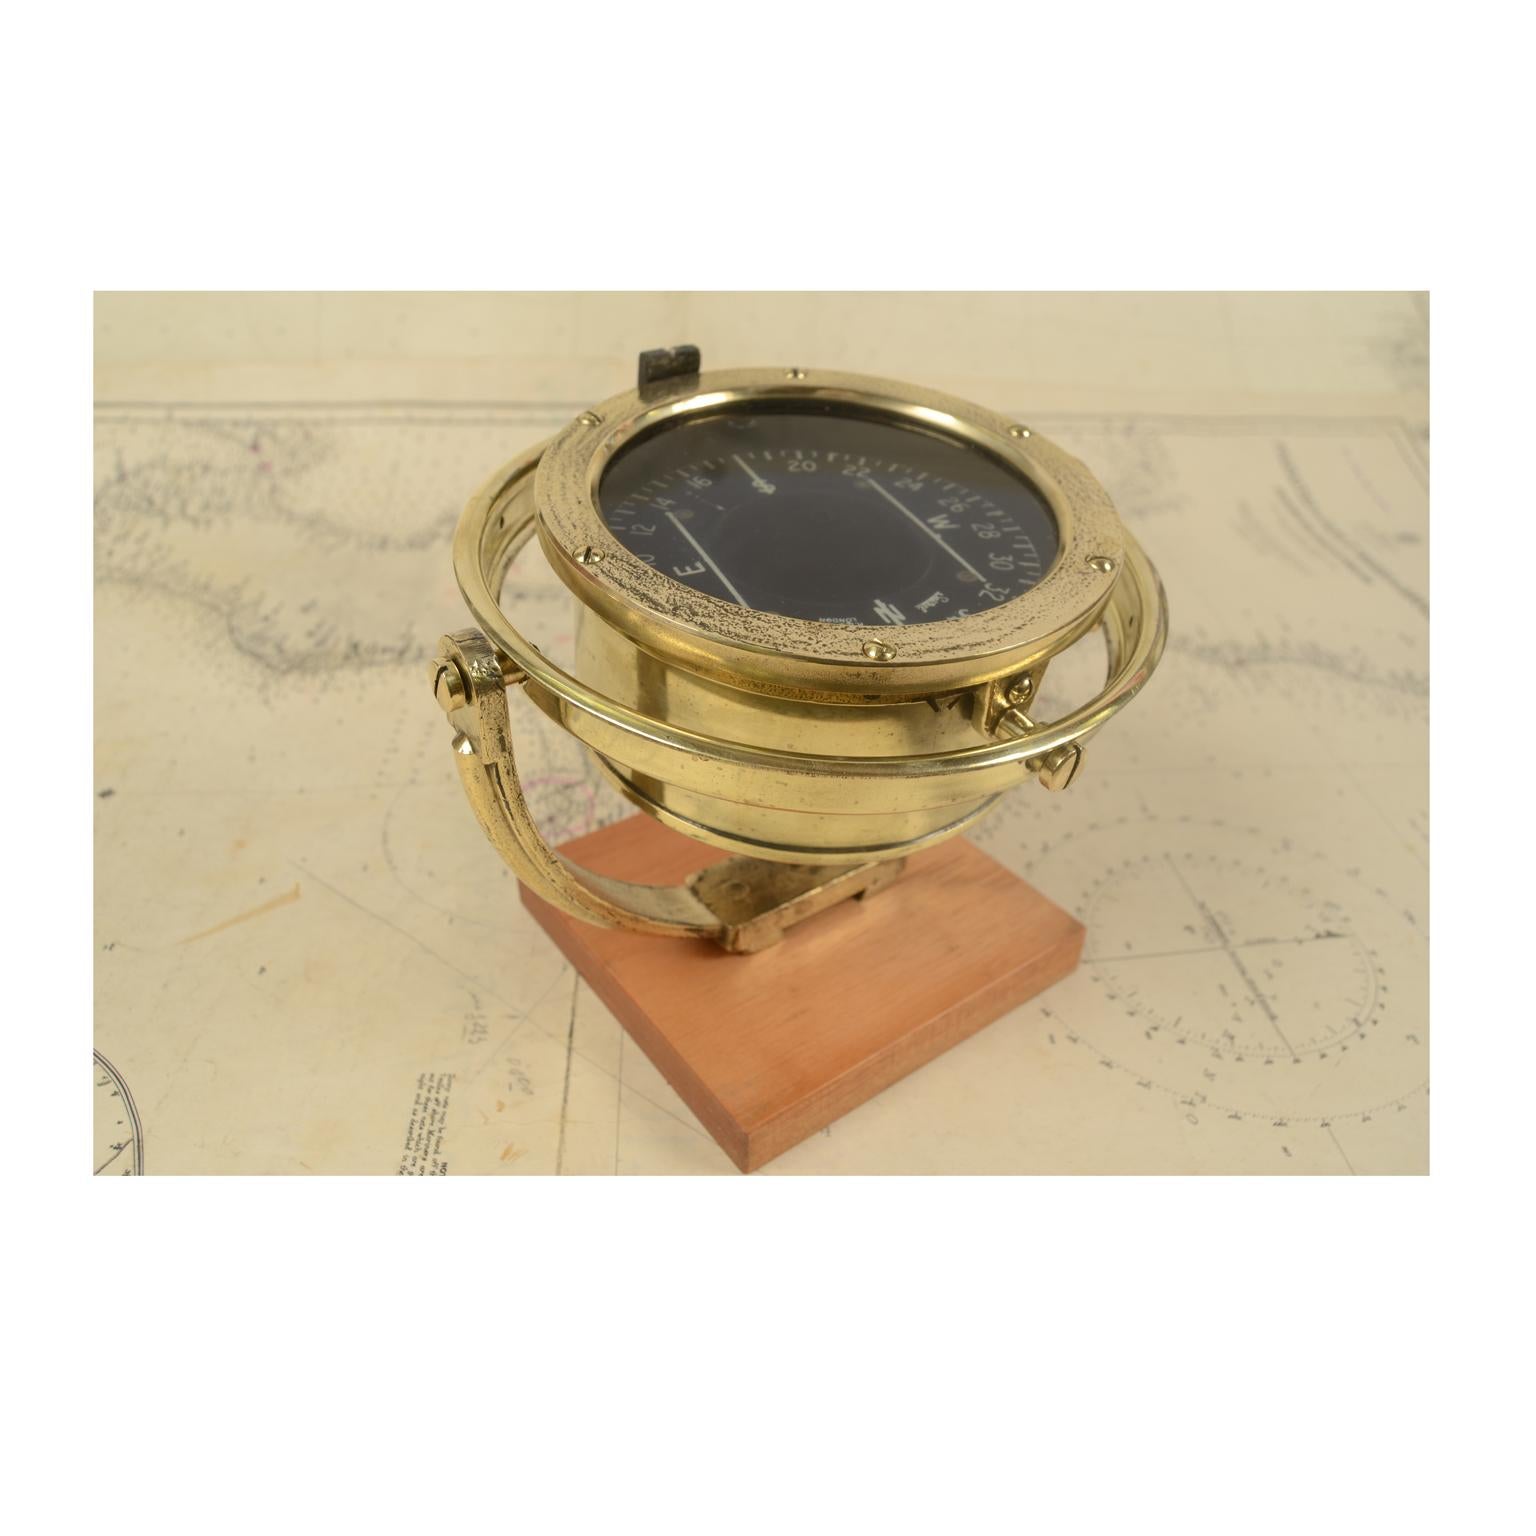 Sestrel Aeronautical Magnetic Compass Signed H B & S Ltd London on Wooden Base 2